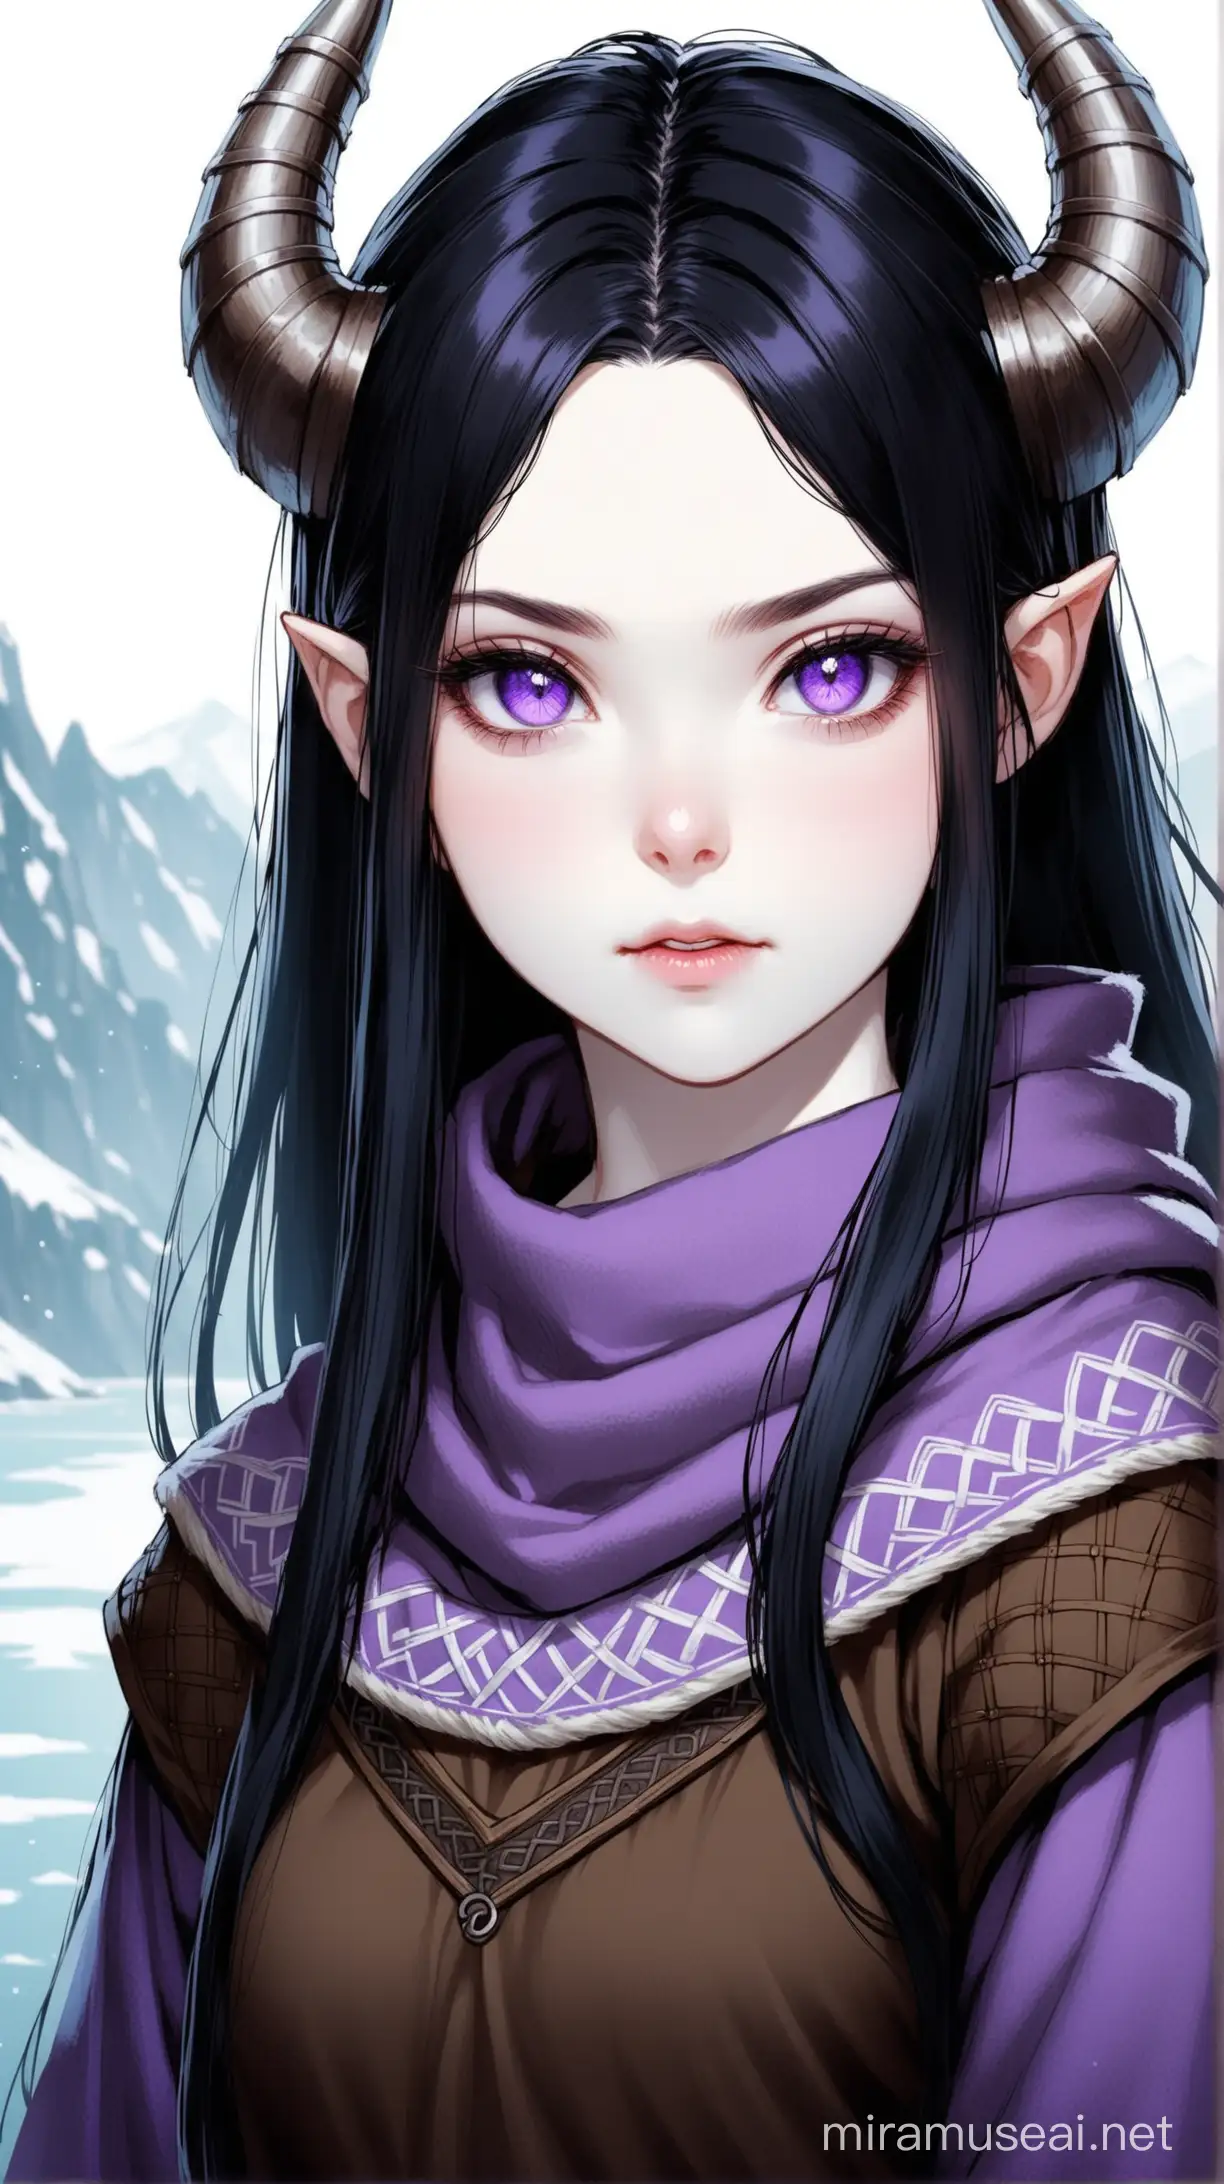 Adventurous Viking Girl with Black Hair and Violet Eyes